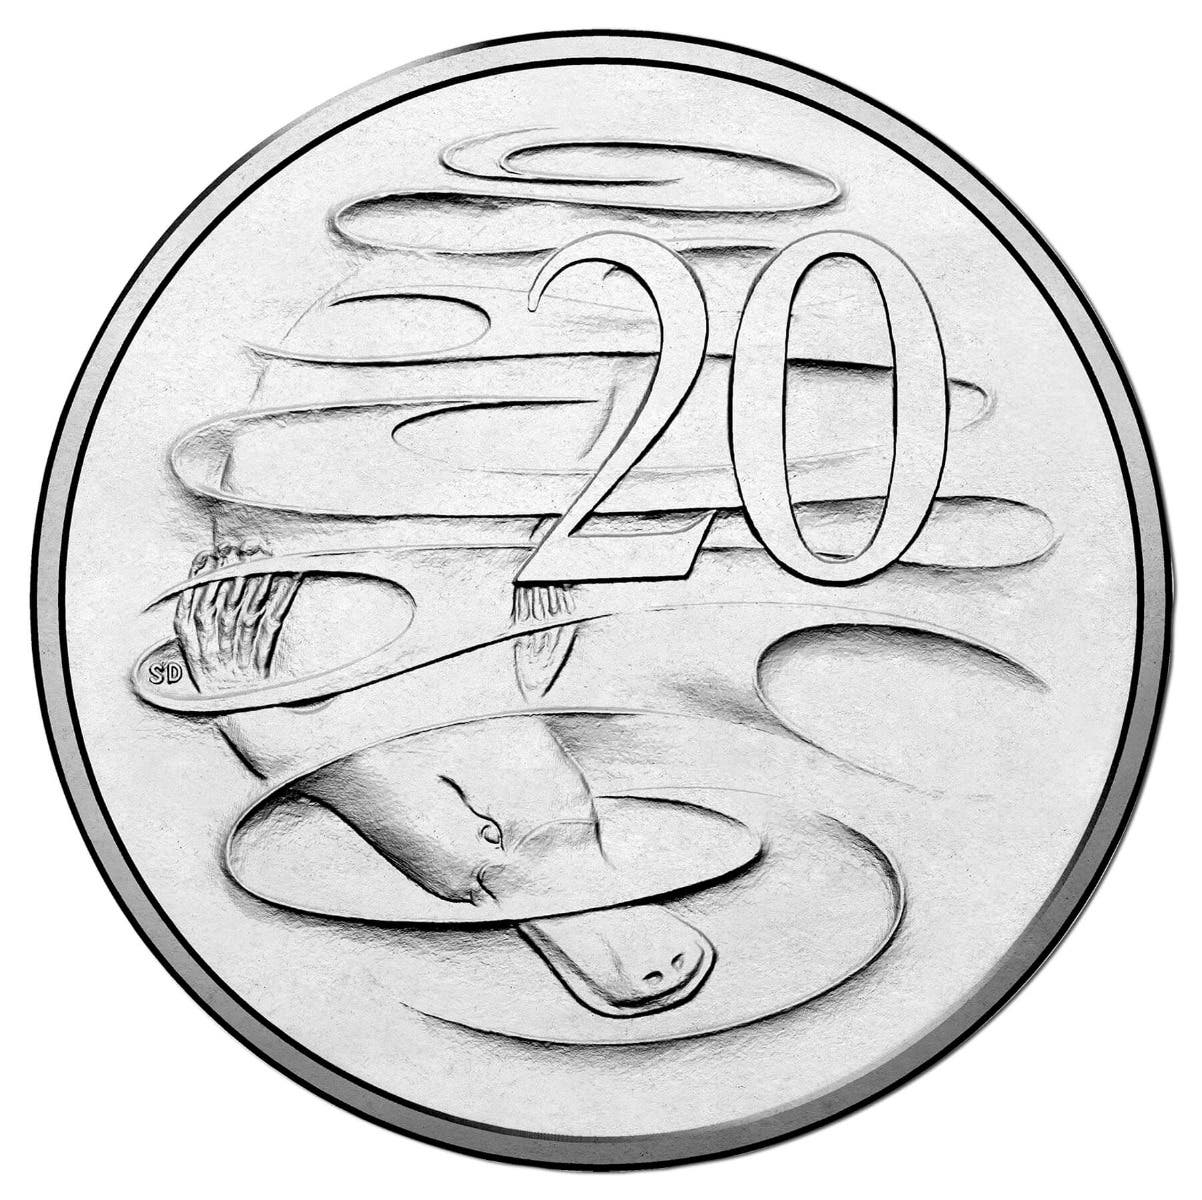 Australia Moon Landing 50th Anniversary 2019 6-Coin Mint Set